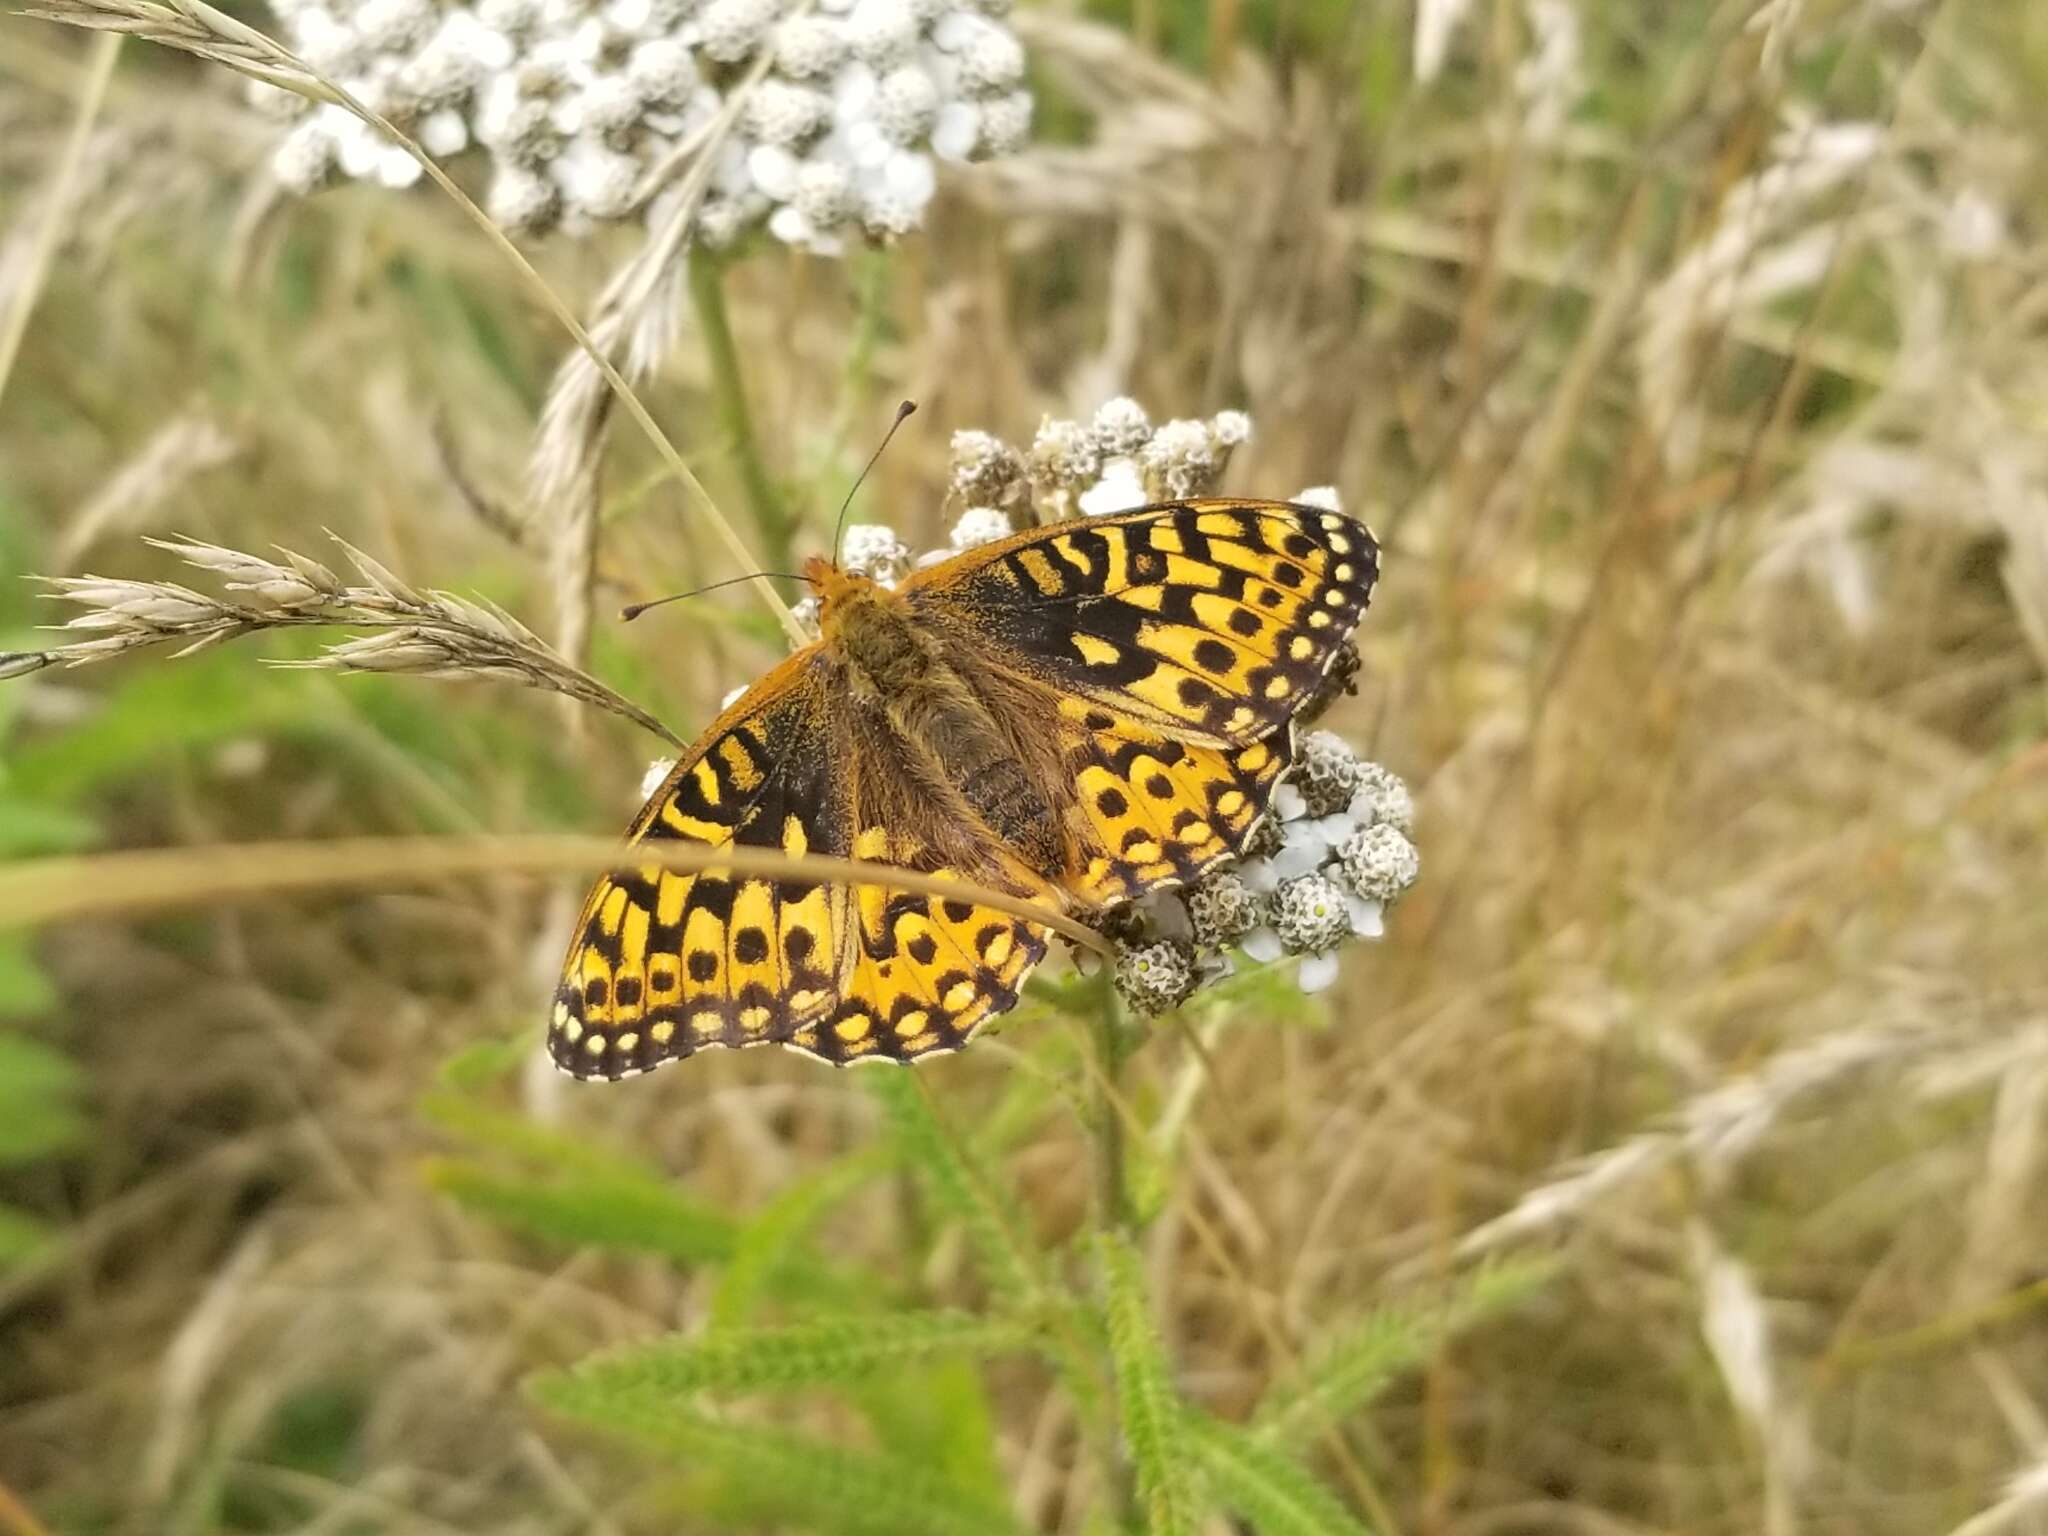 Image of Oregon silverspot butterfly